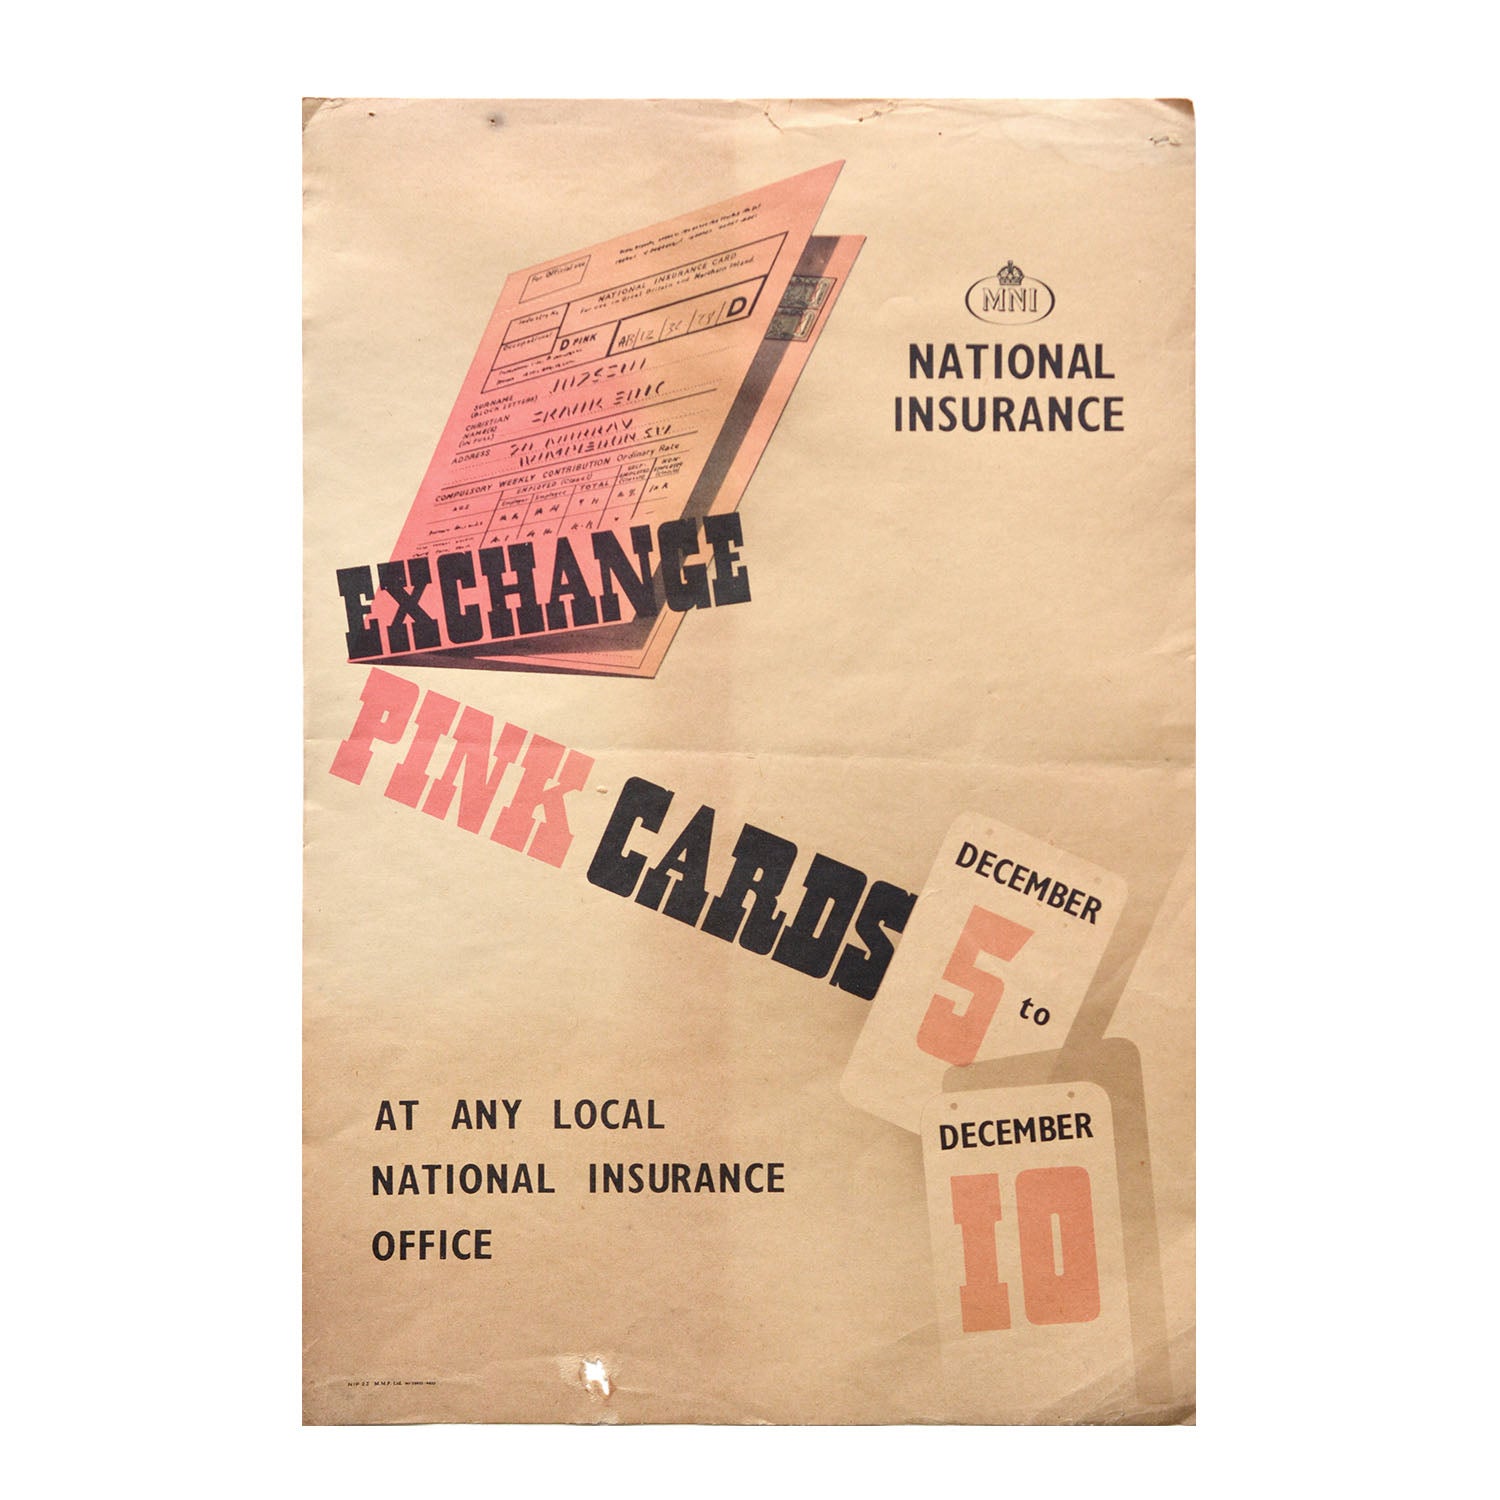 Original poster, National Insurance, Exchange pink cards, 1950